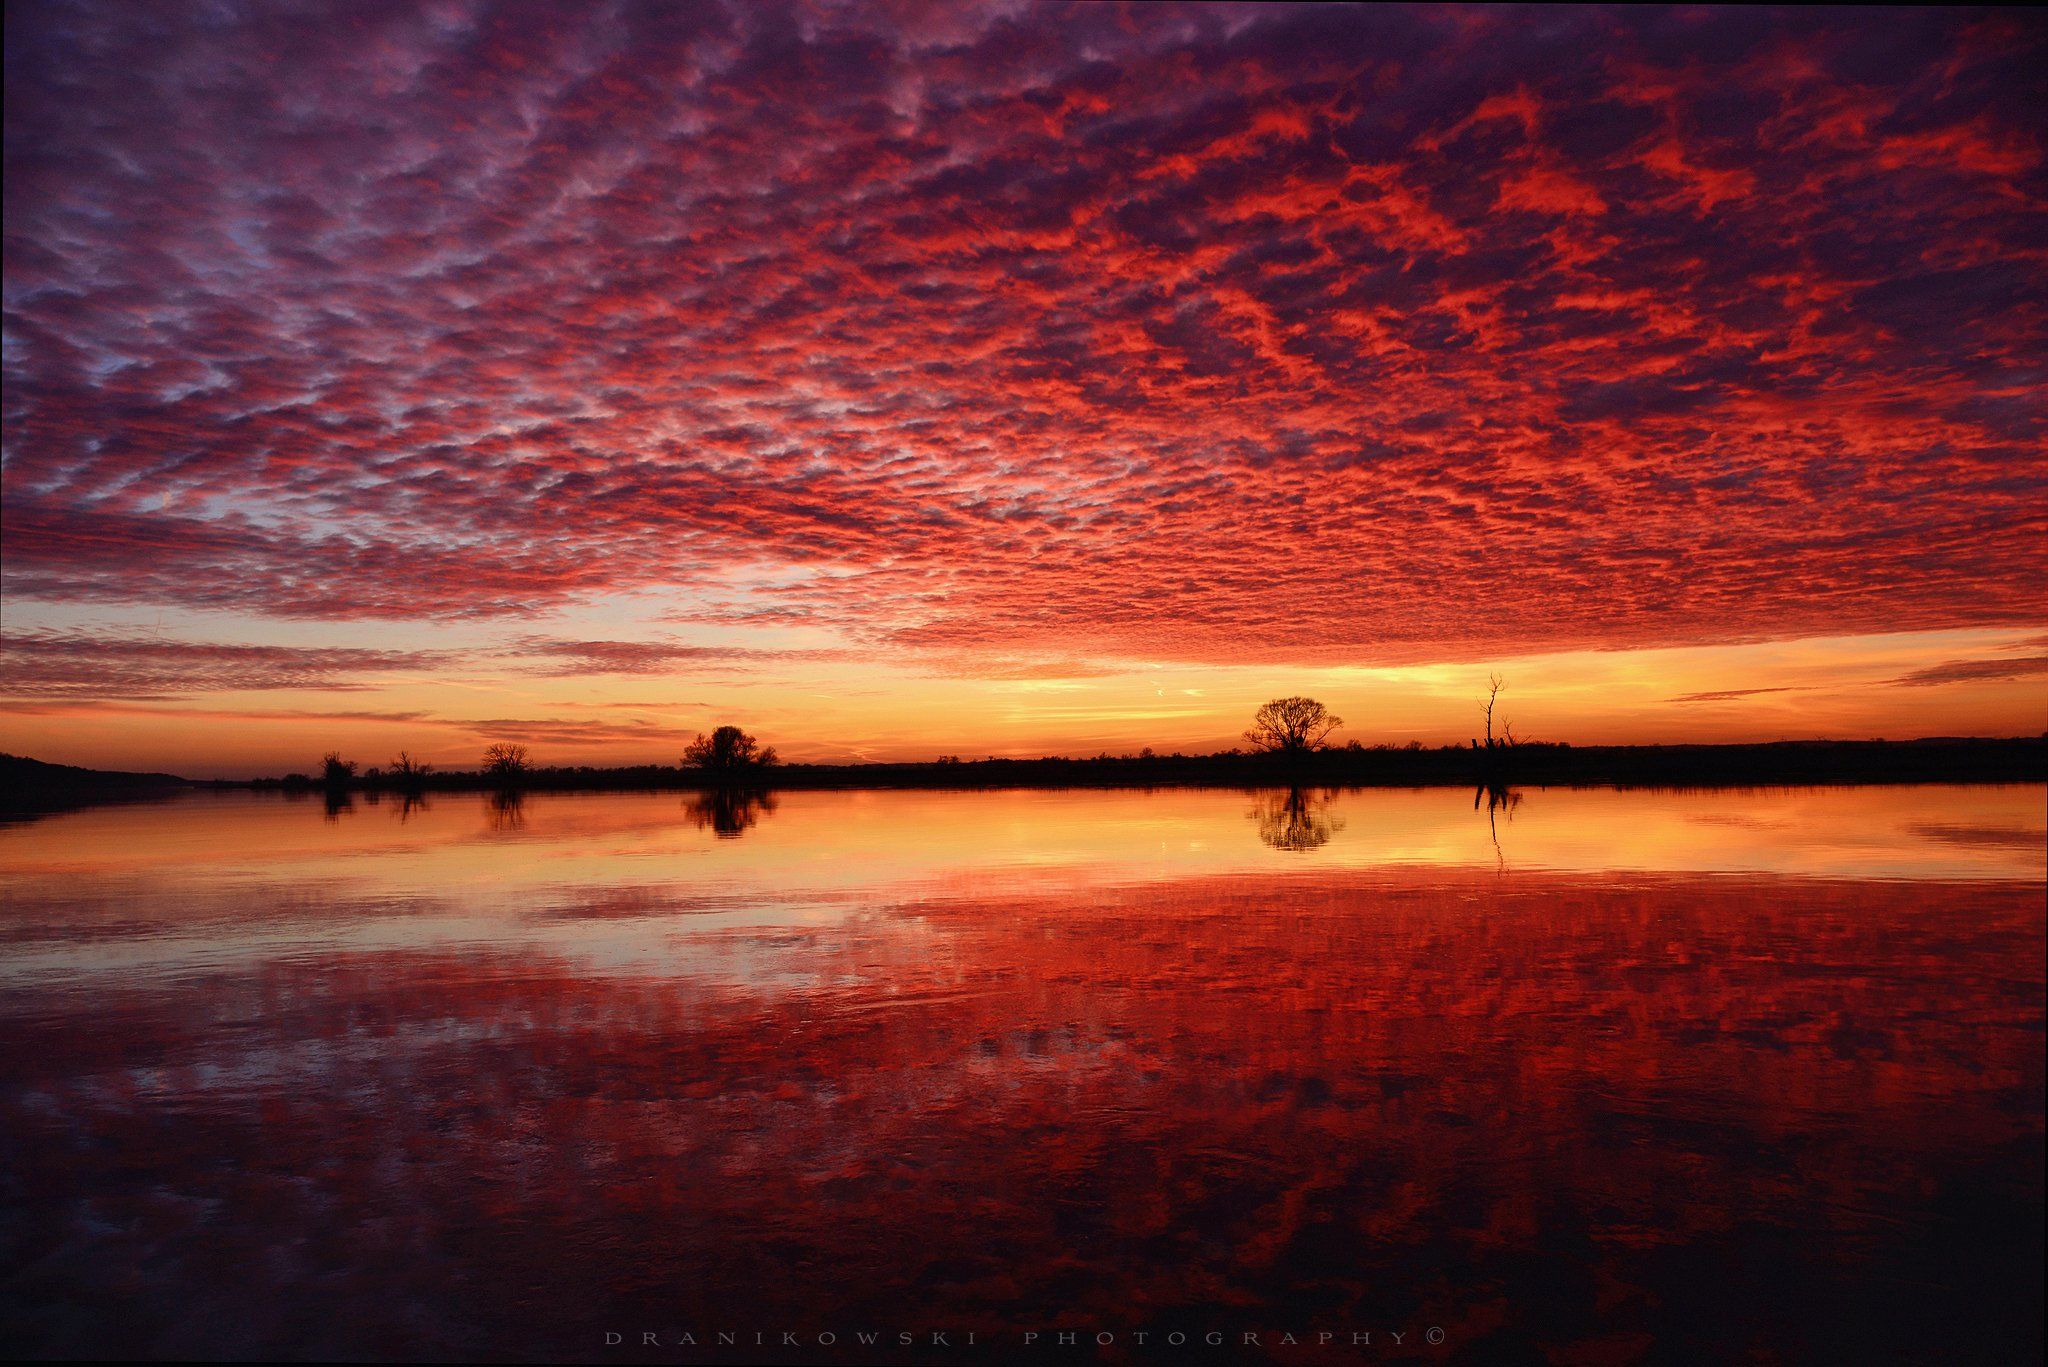 after sunset river odra mirror reflection dranikowski clouds red sky water landscape, Radoslaw Dranikowski